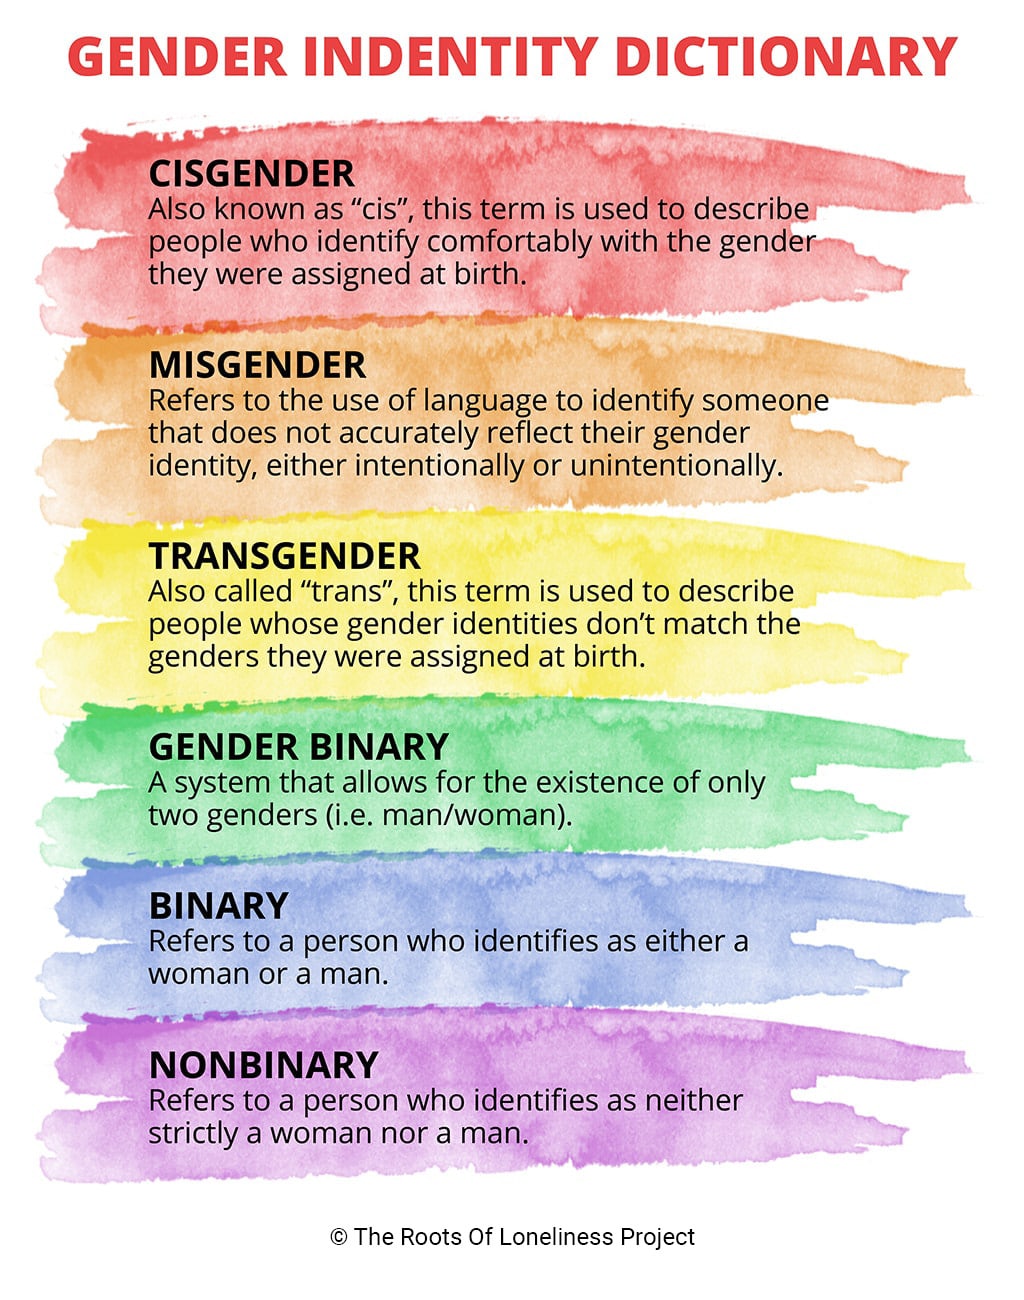 Infographic Defining Gender Identity Terminology